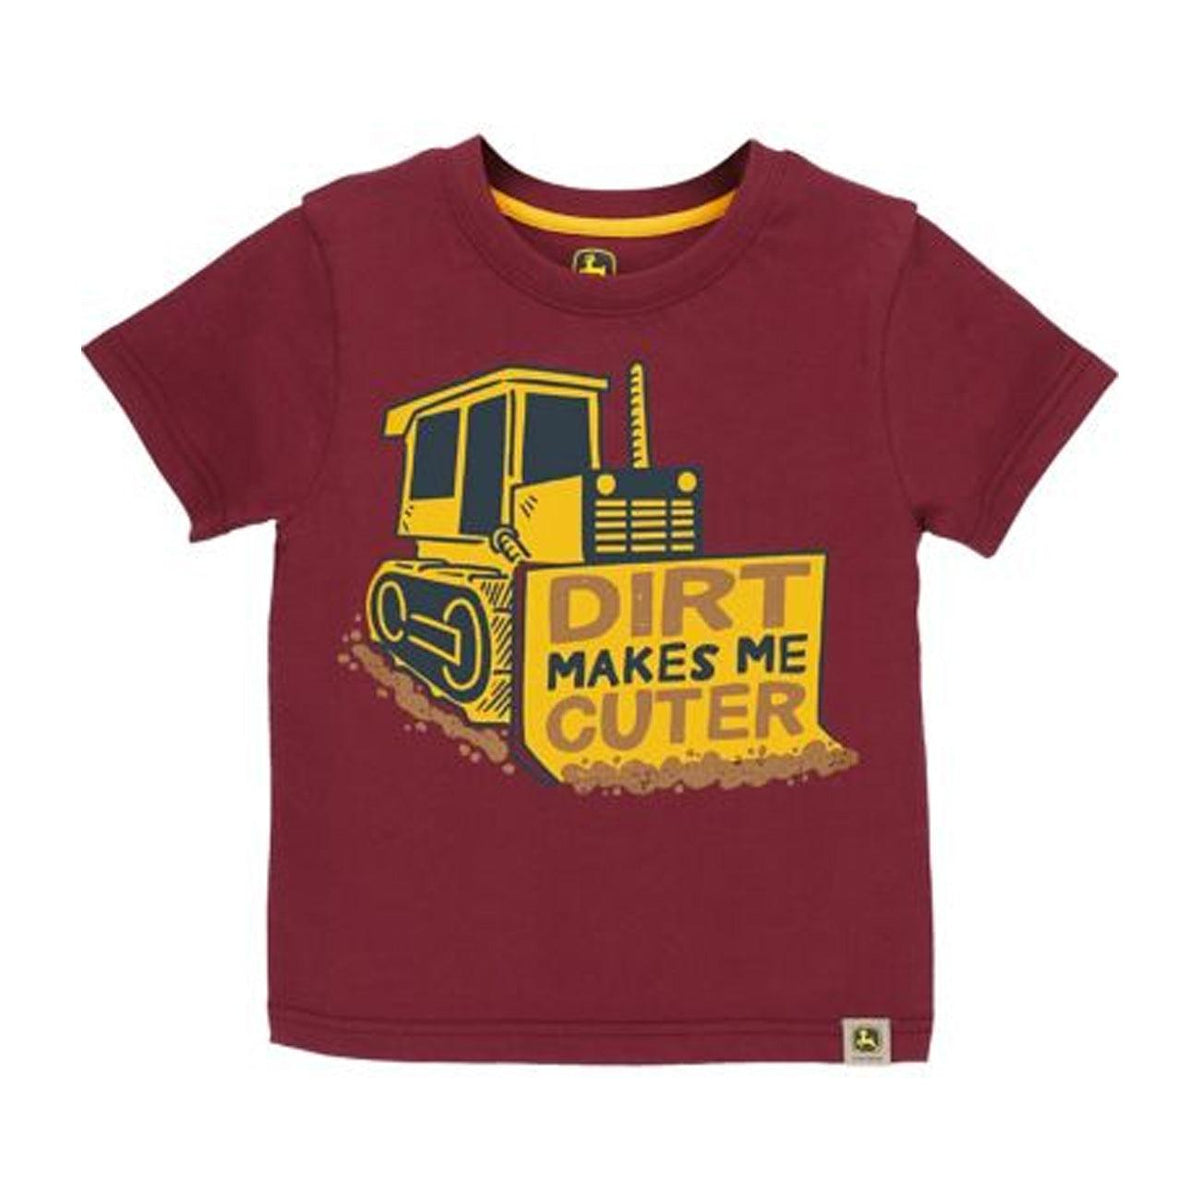 Premium Quality Graphic Soft Cotton T-Shirt For Boys (YO-11187) - Brands River